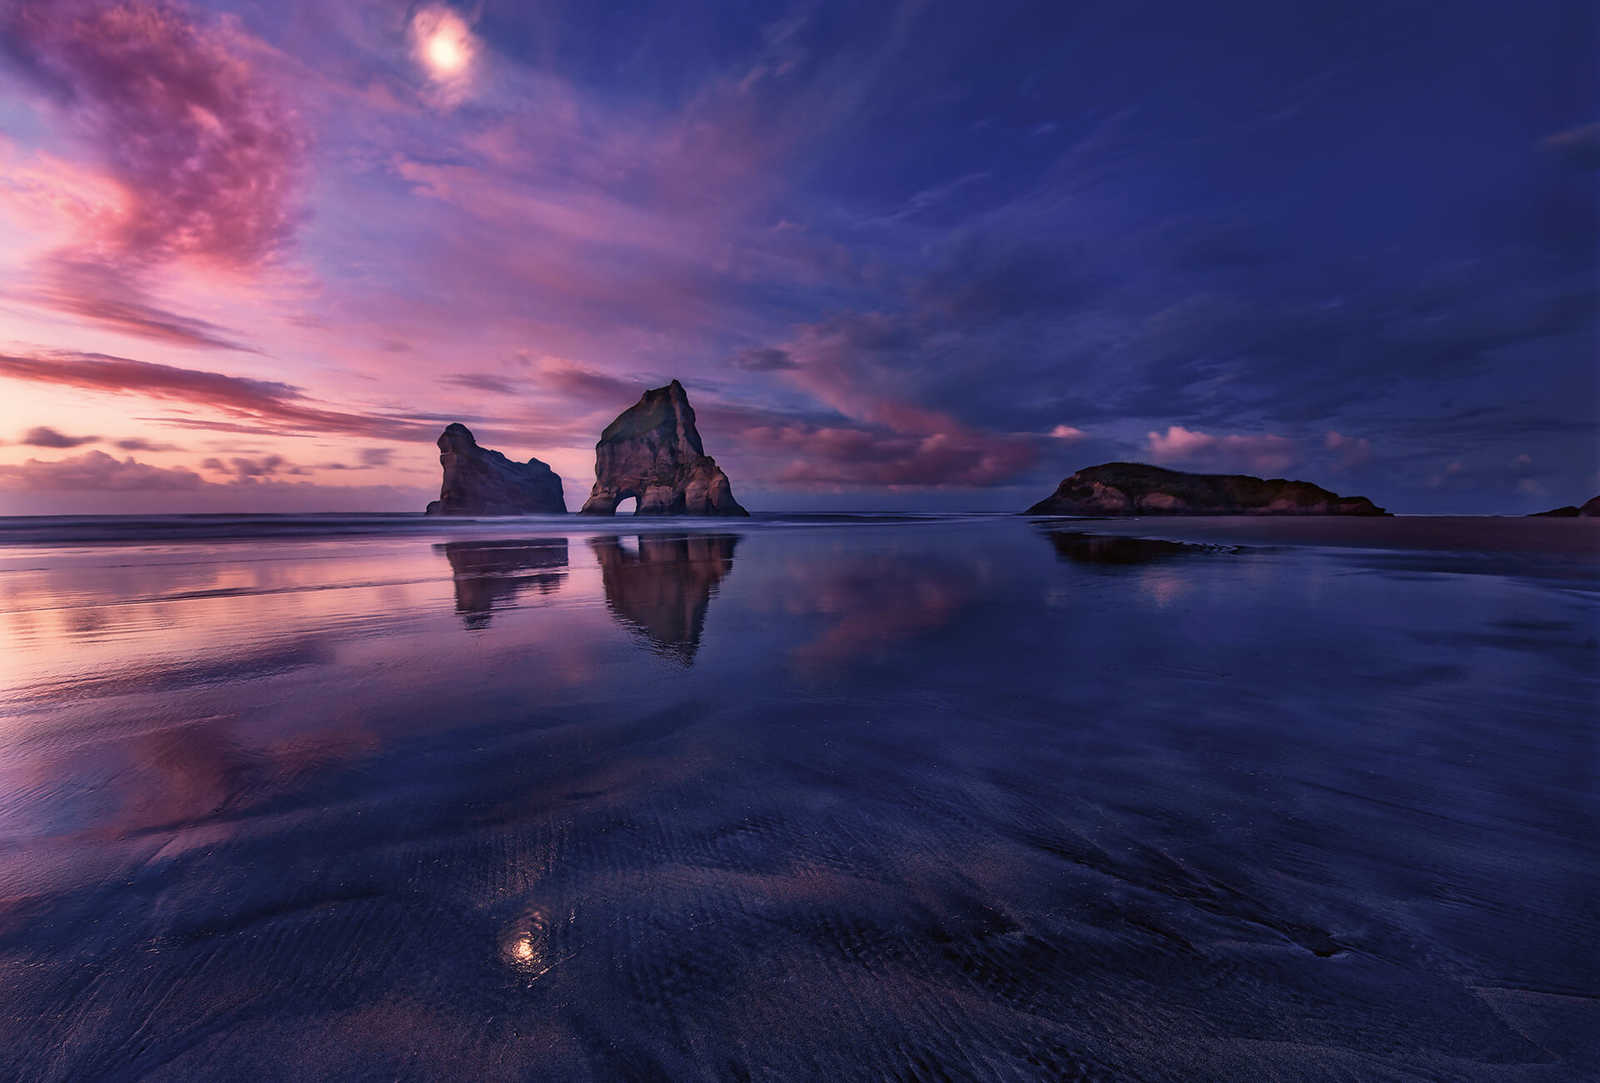             Fototapete Strand bei Sonnenuntergang – Violett, Blau
        